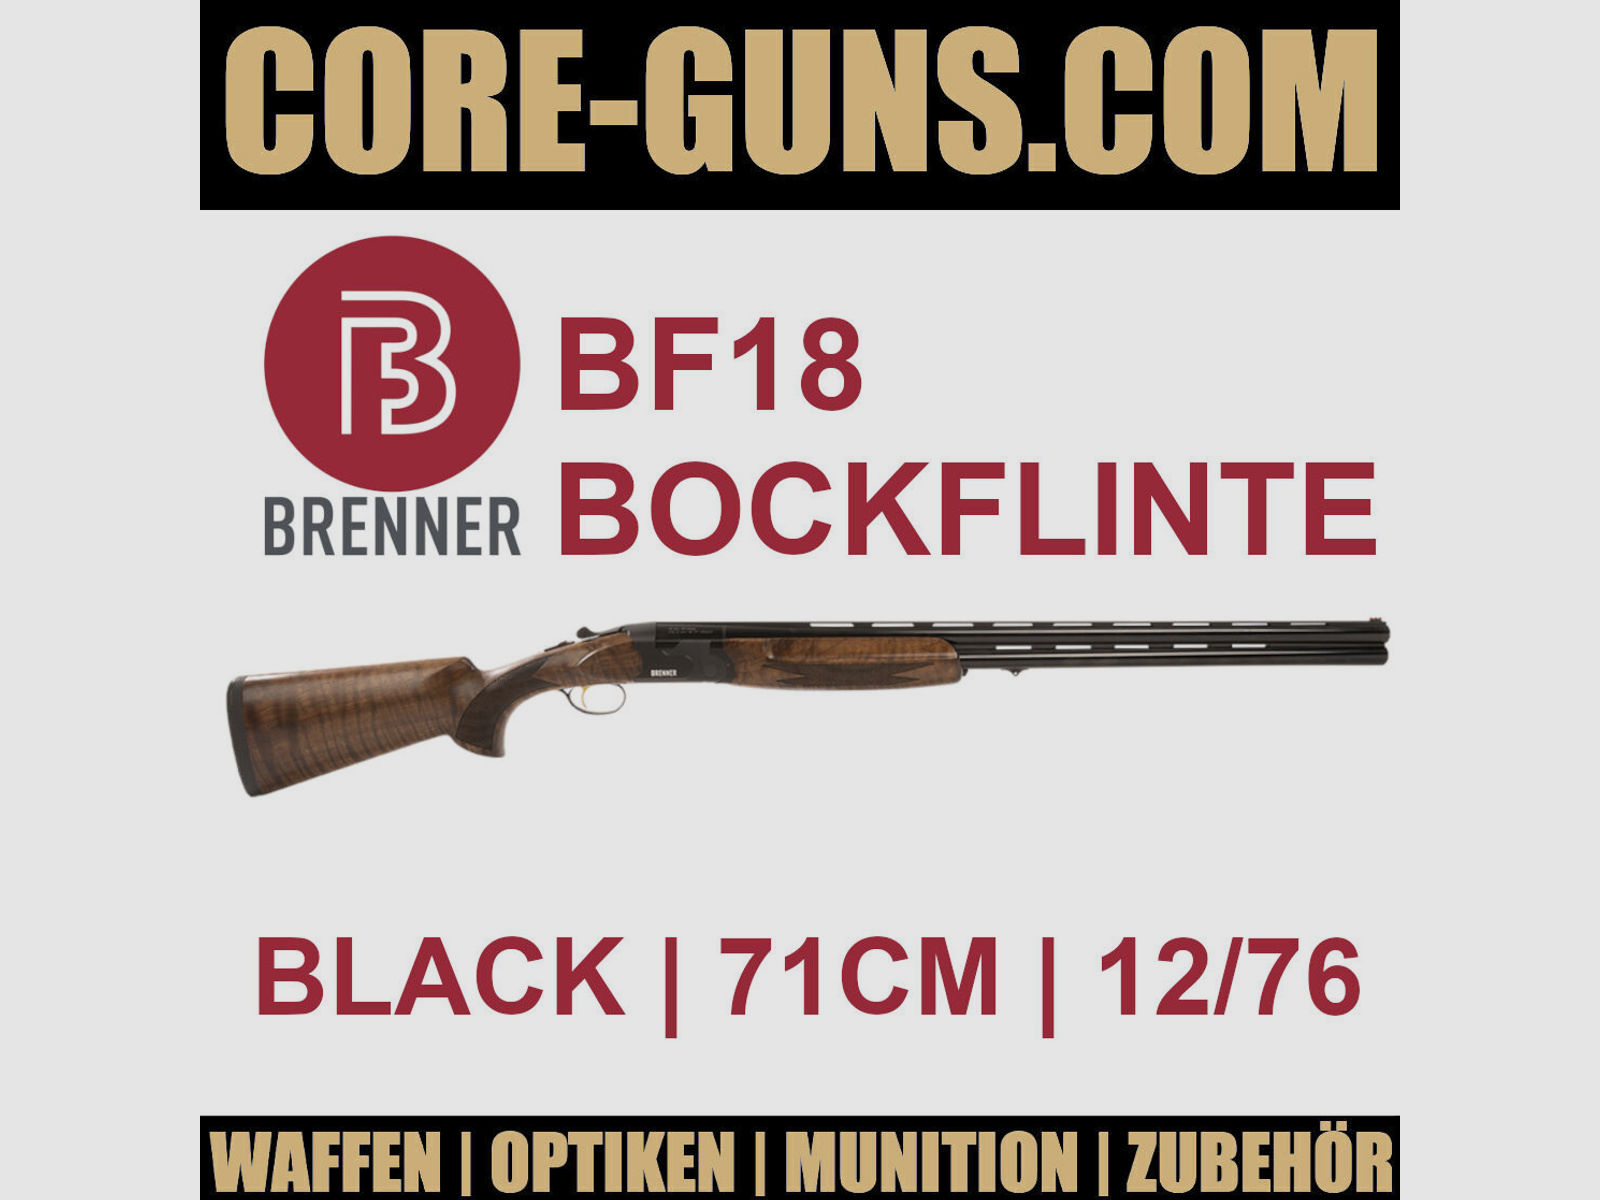 Brenner BF18 black 71cm Brenner Bockflinte Kaliber 12/76	 sofort verfügbar